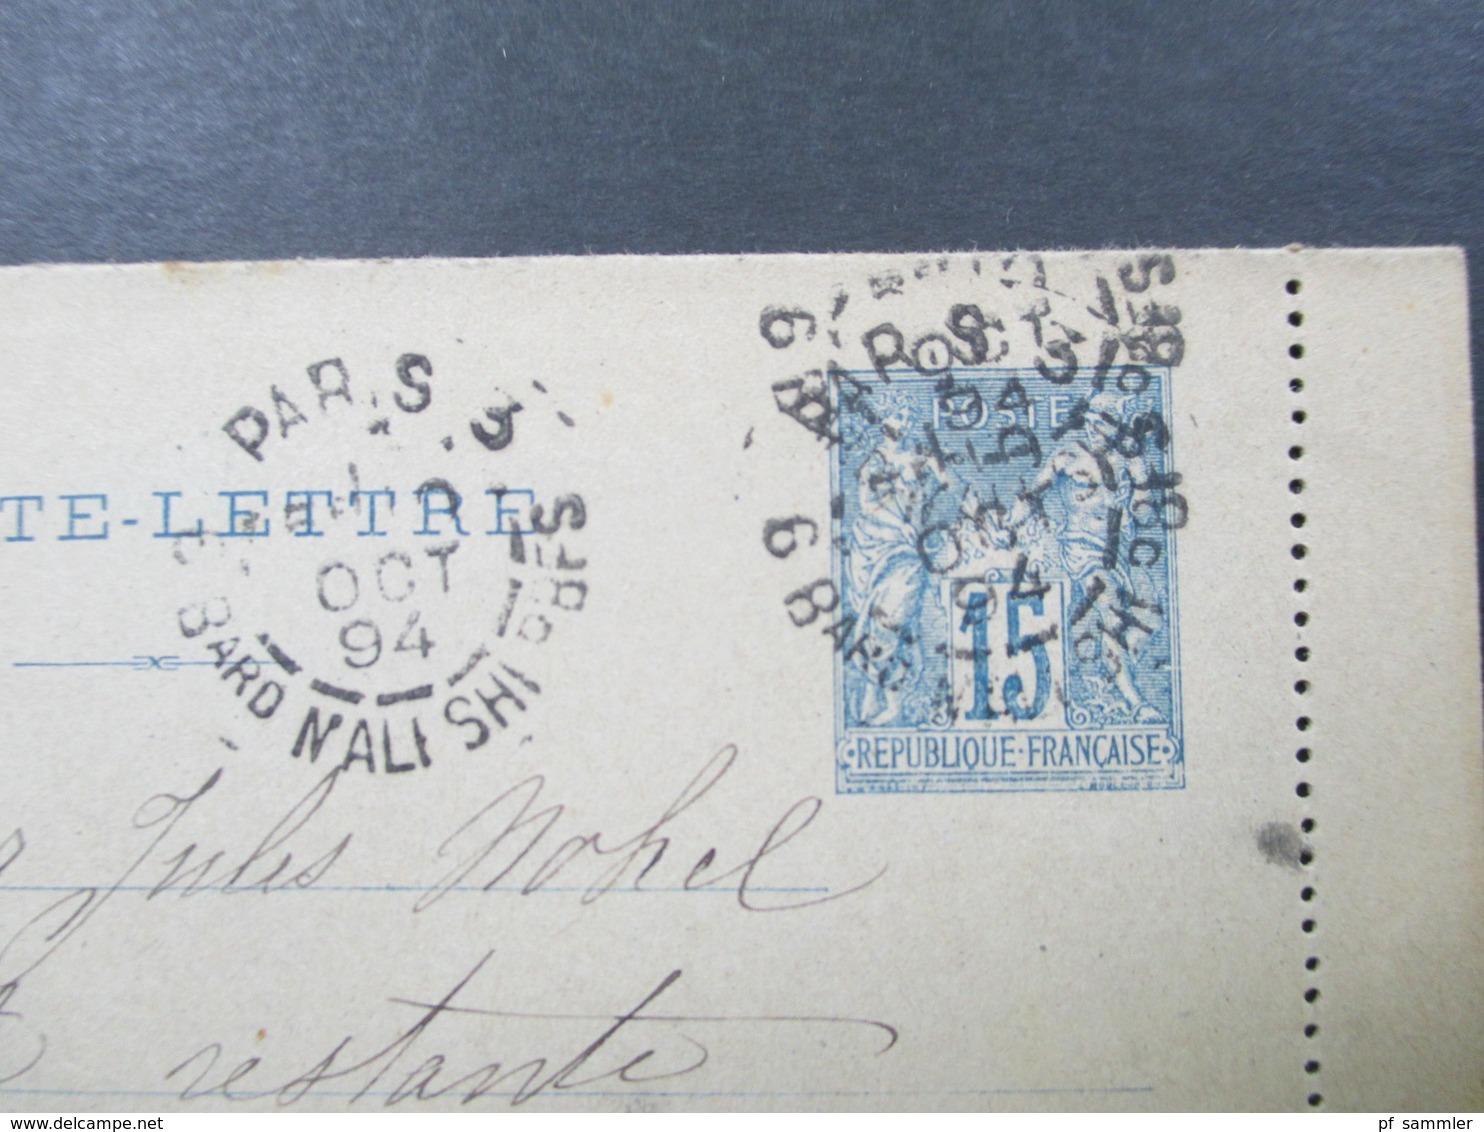 Frankreich 1894 Kartenbrief Poste Restante Ship Letter ?! Nach Tunis - Letter Cards